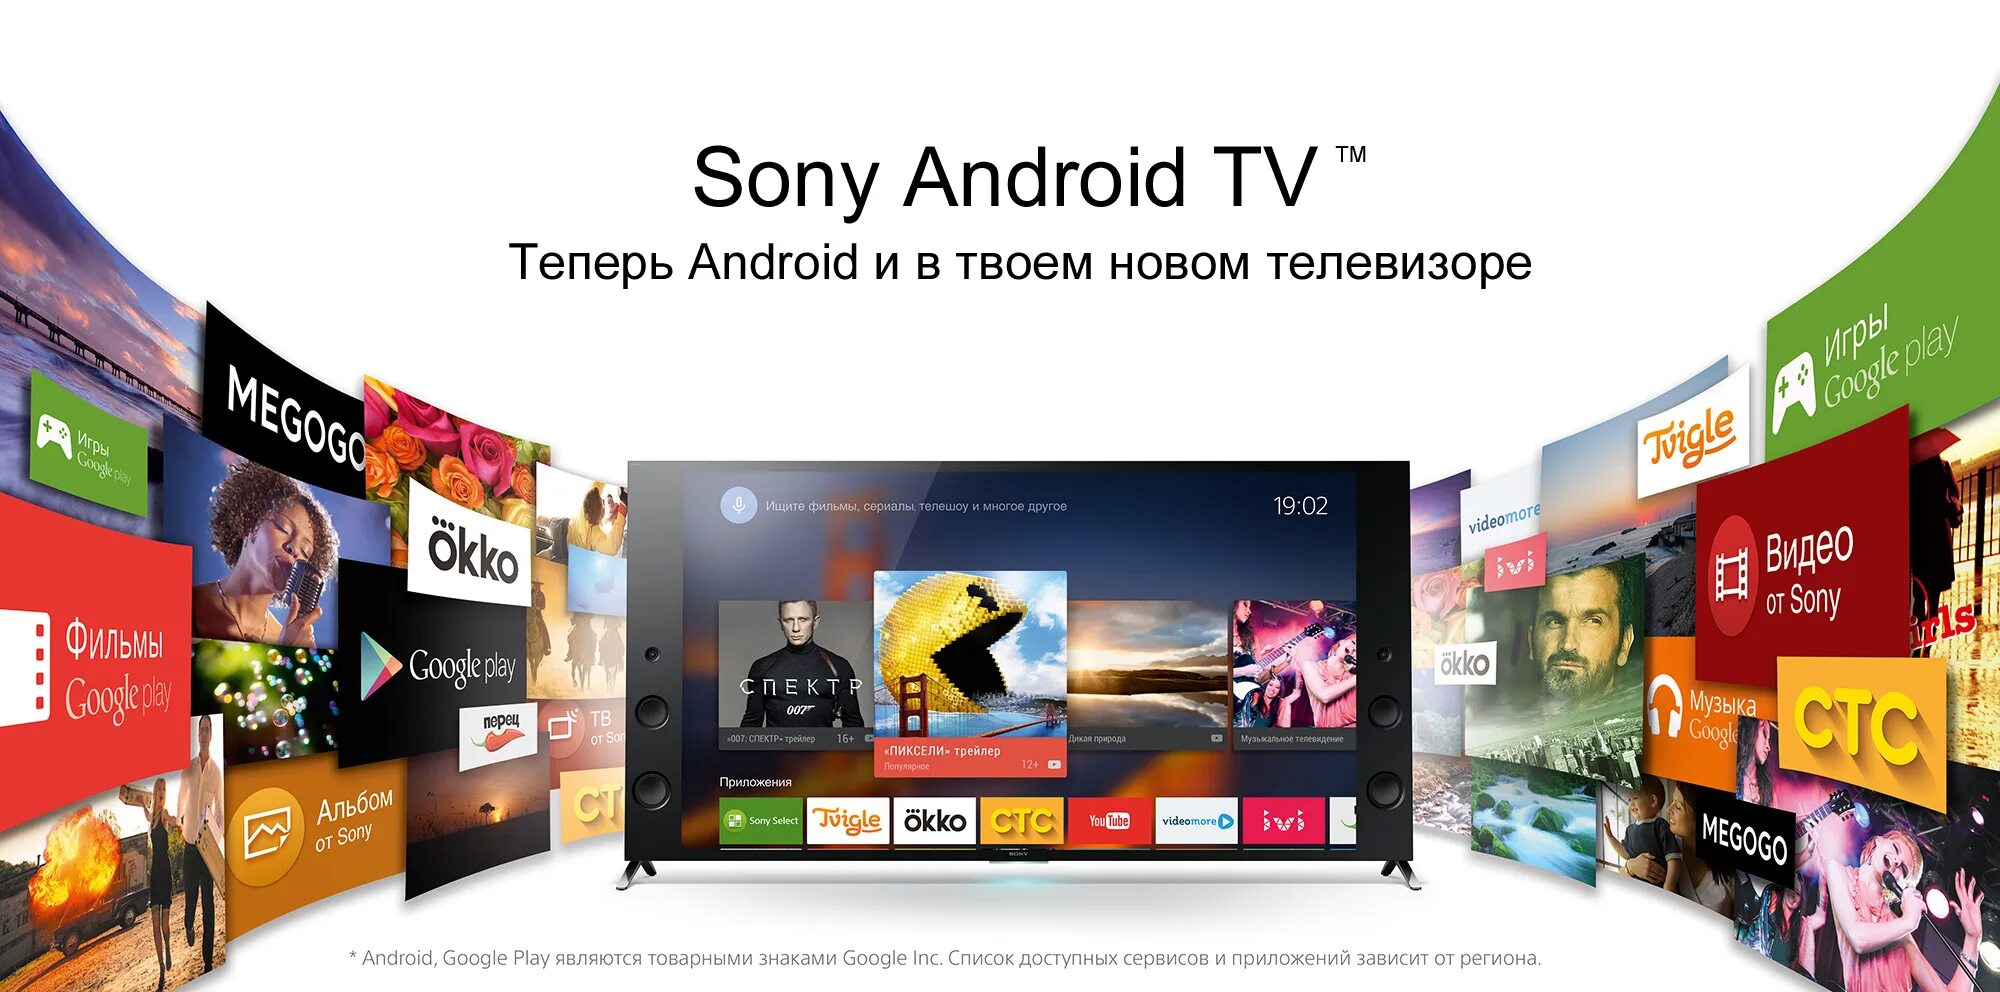 Sony Smart TV Android. Телевизор сони смарт ТВ. Телевизор Smart TV Android. Телевизор смарт реклама.